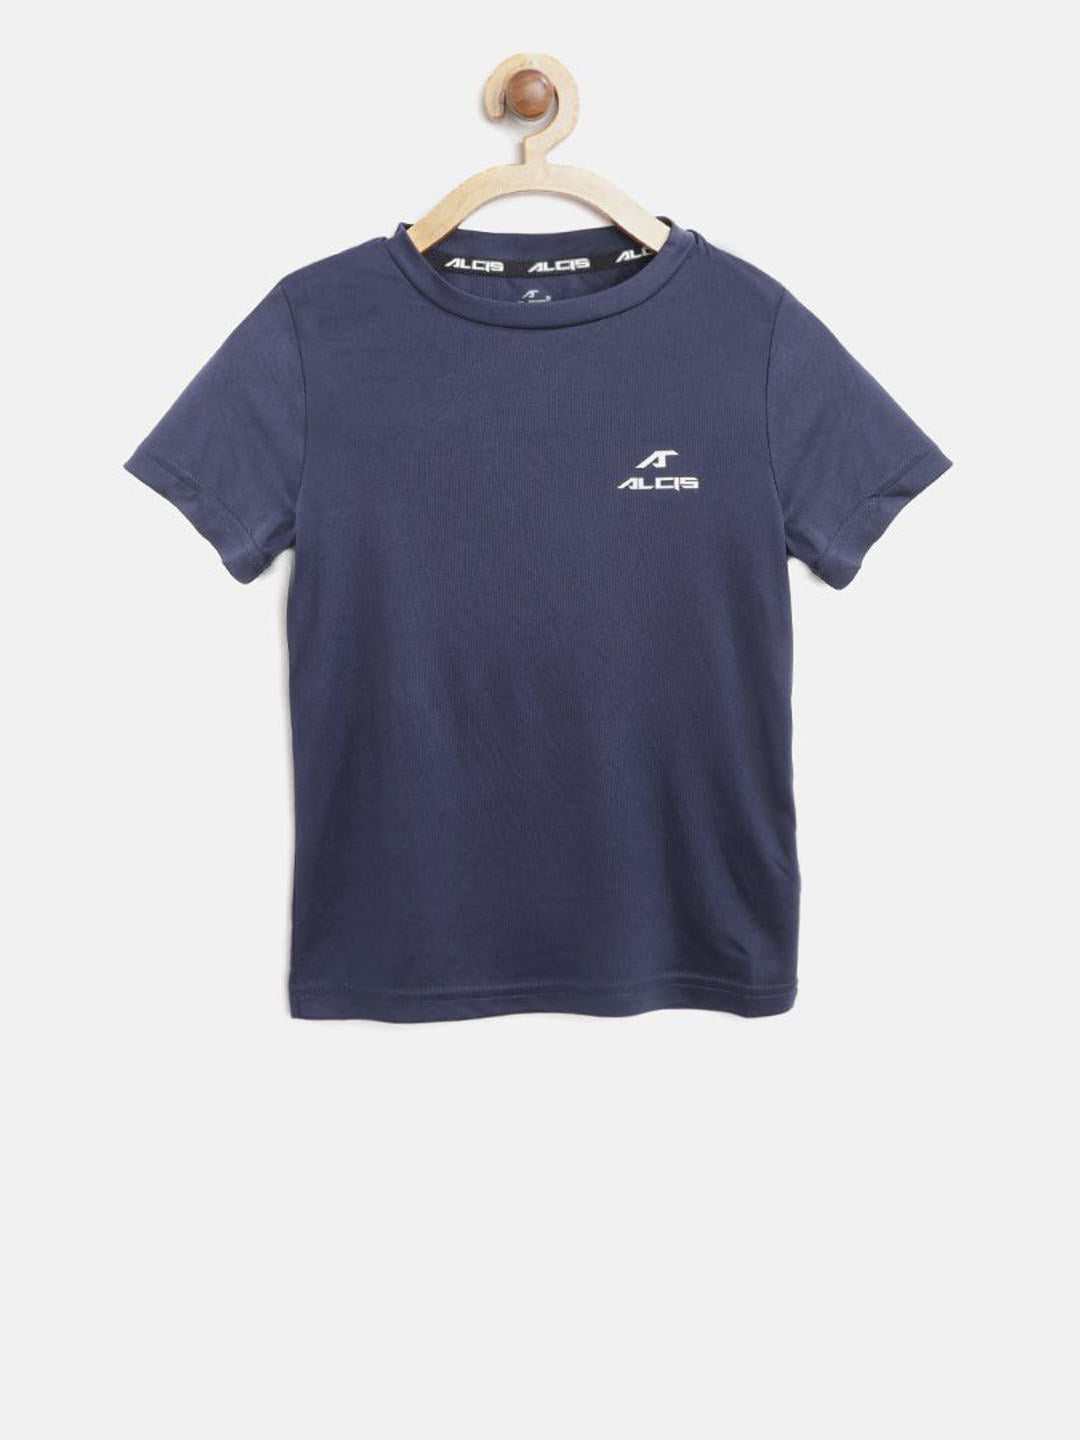 Alcis Boys Navy Blue Solid Round Neck T-shirt BTE8035-4